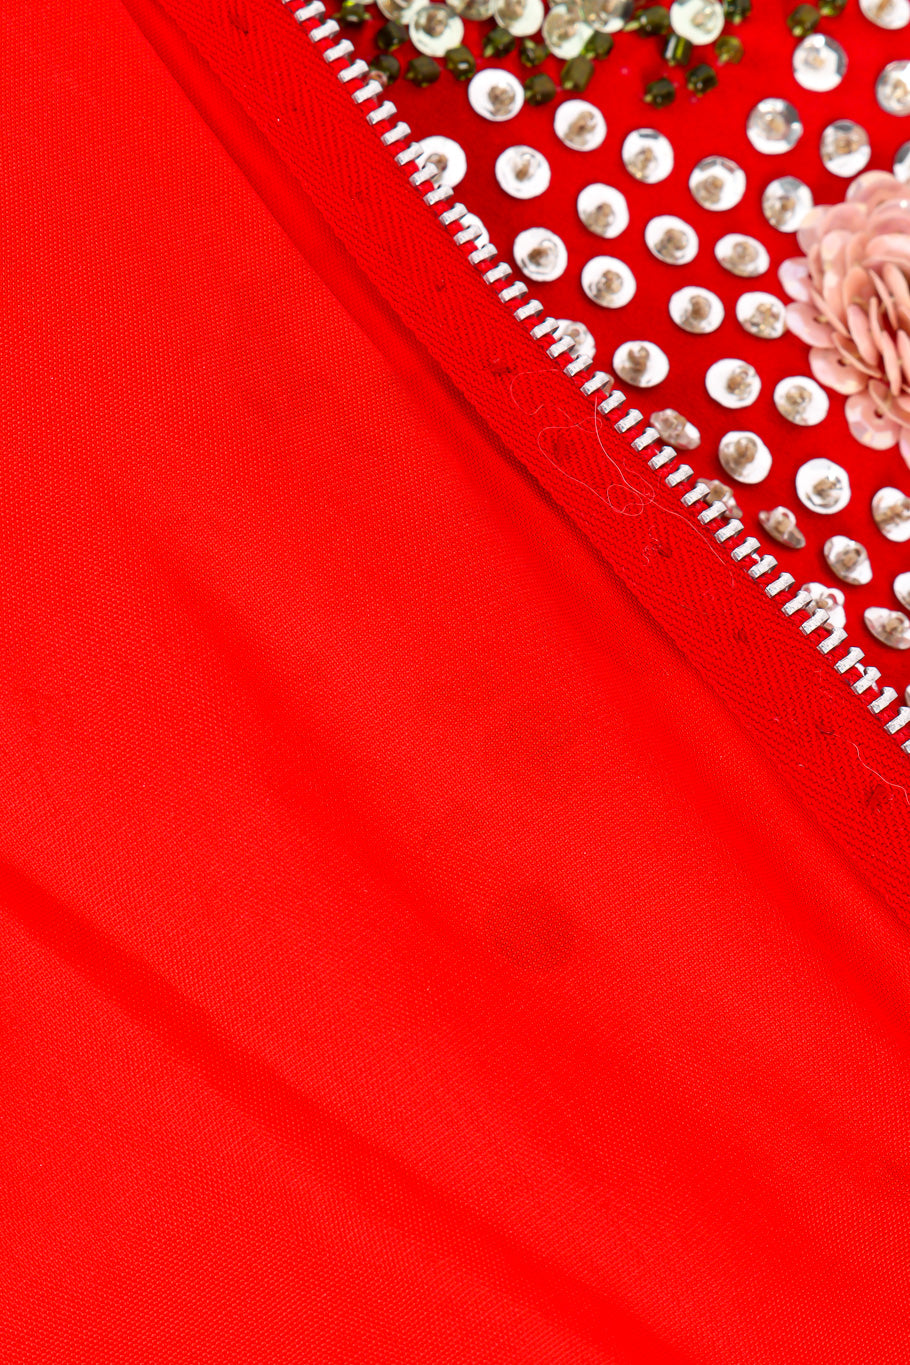 Vintage Dynasty Sequin Dragon Silk Jacket marking on lining near front zipper closeup @Recessla